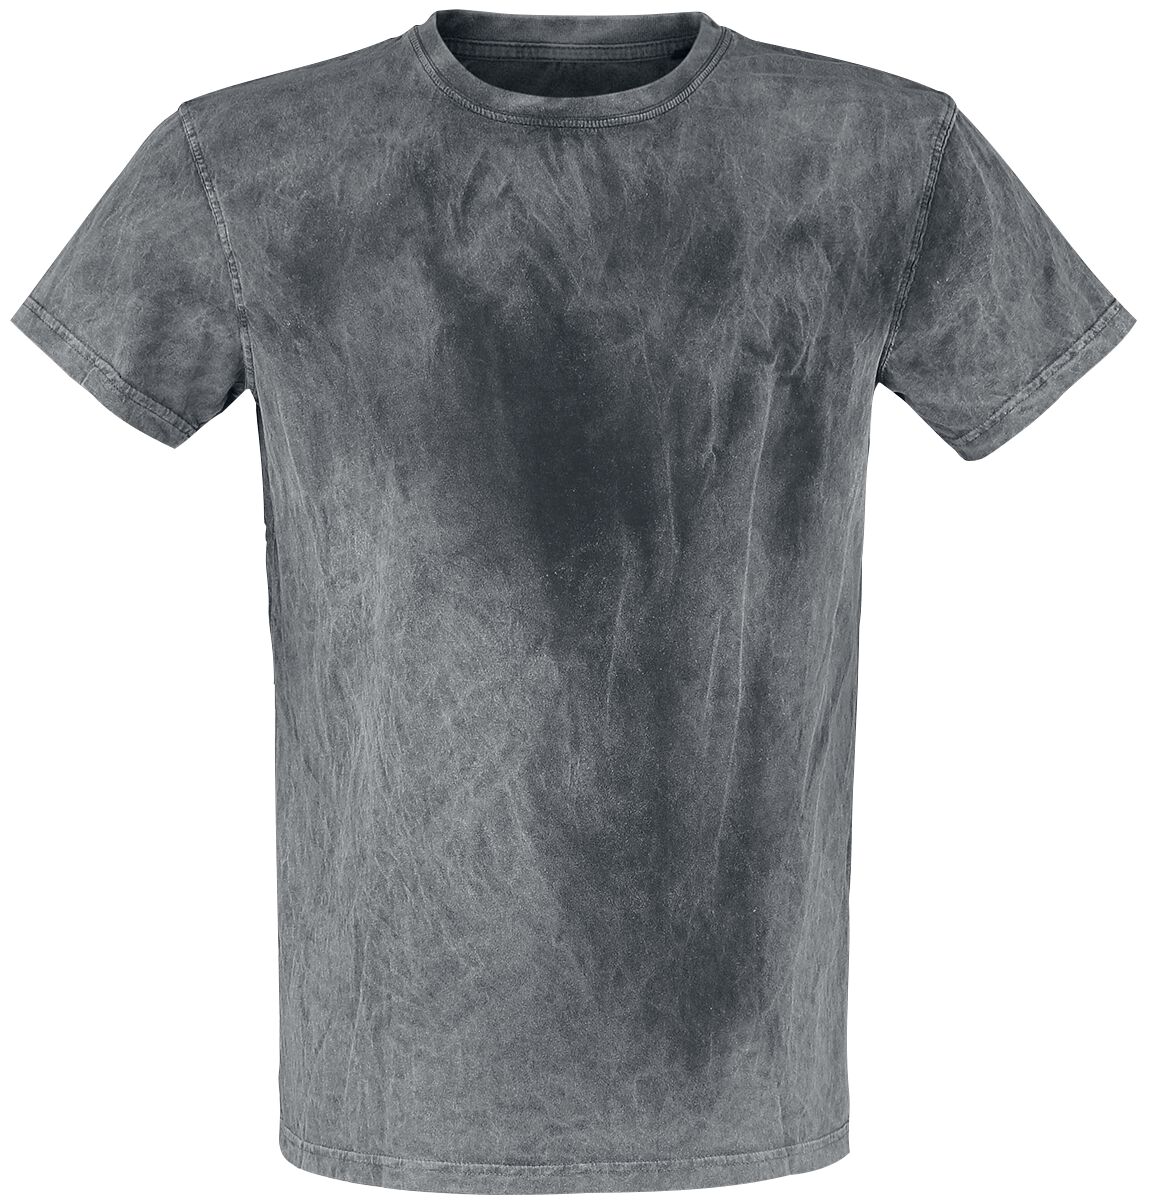 Outer Vision T-Shirt - Man`s T-Shirt - S bis XXL - für Männer - Größe S - grau